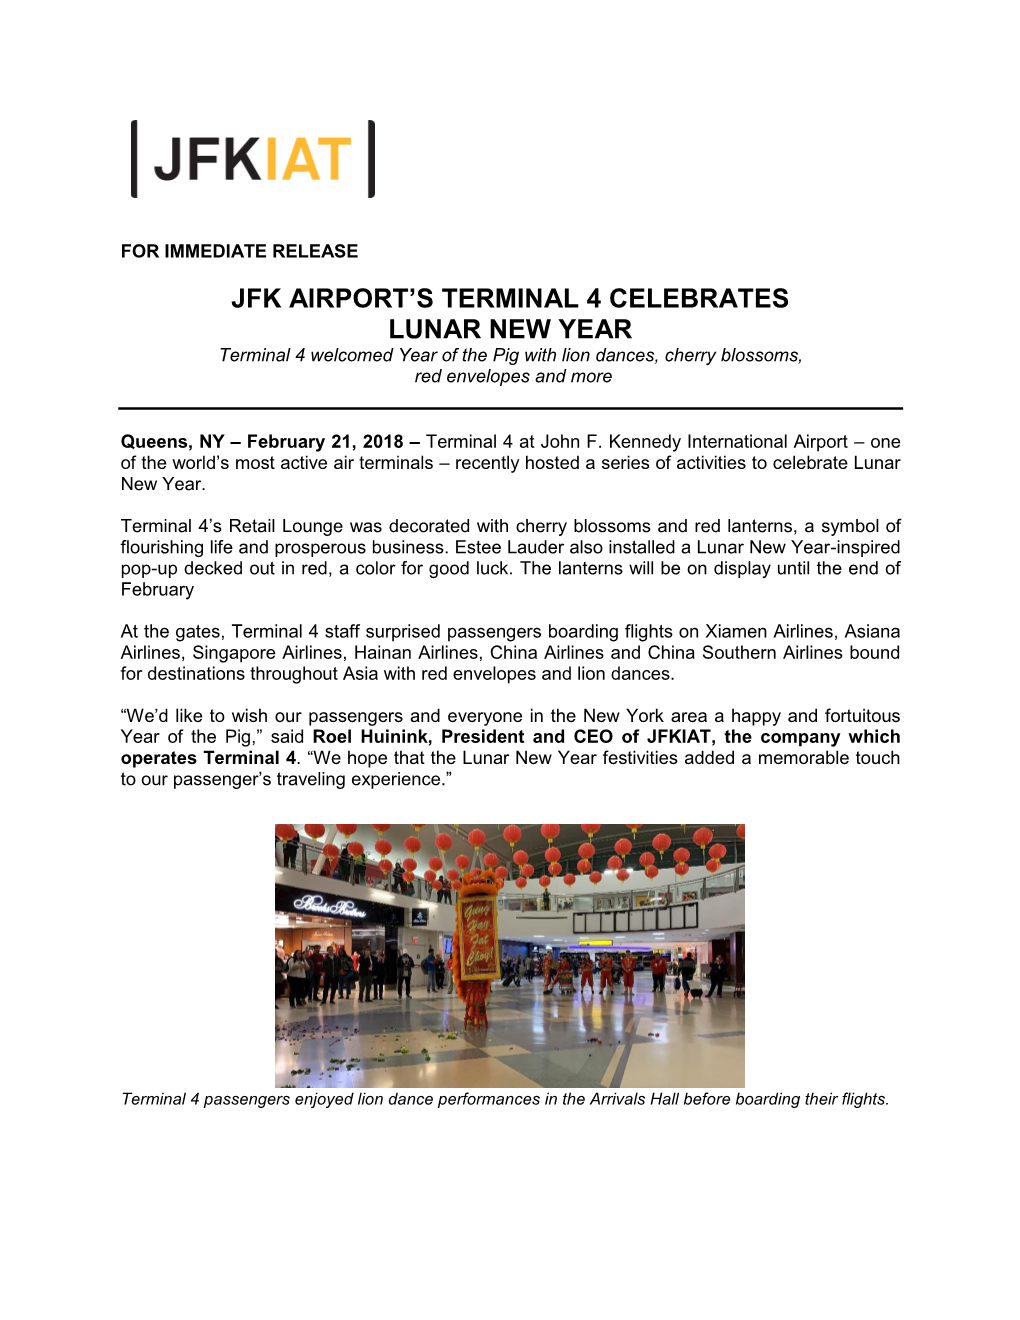 Jfk Airport's Terminal 4 Celebrates Lunar New Year